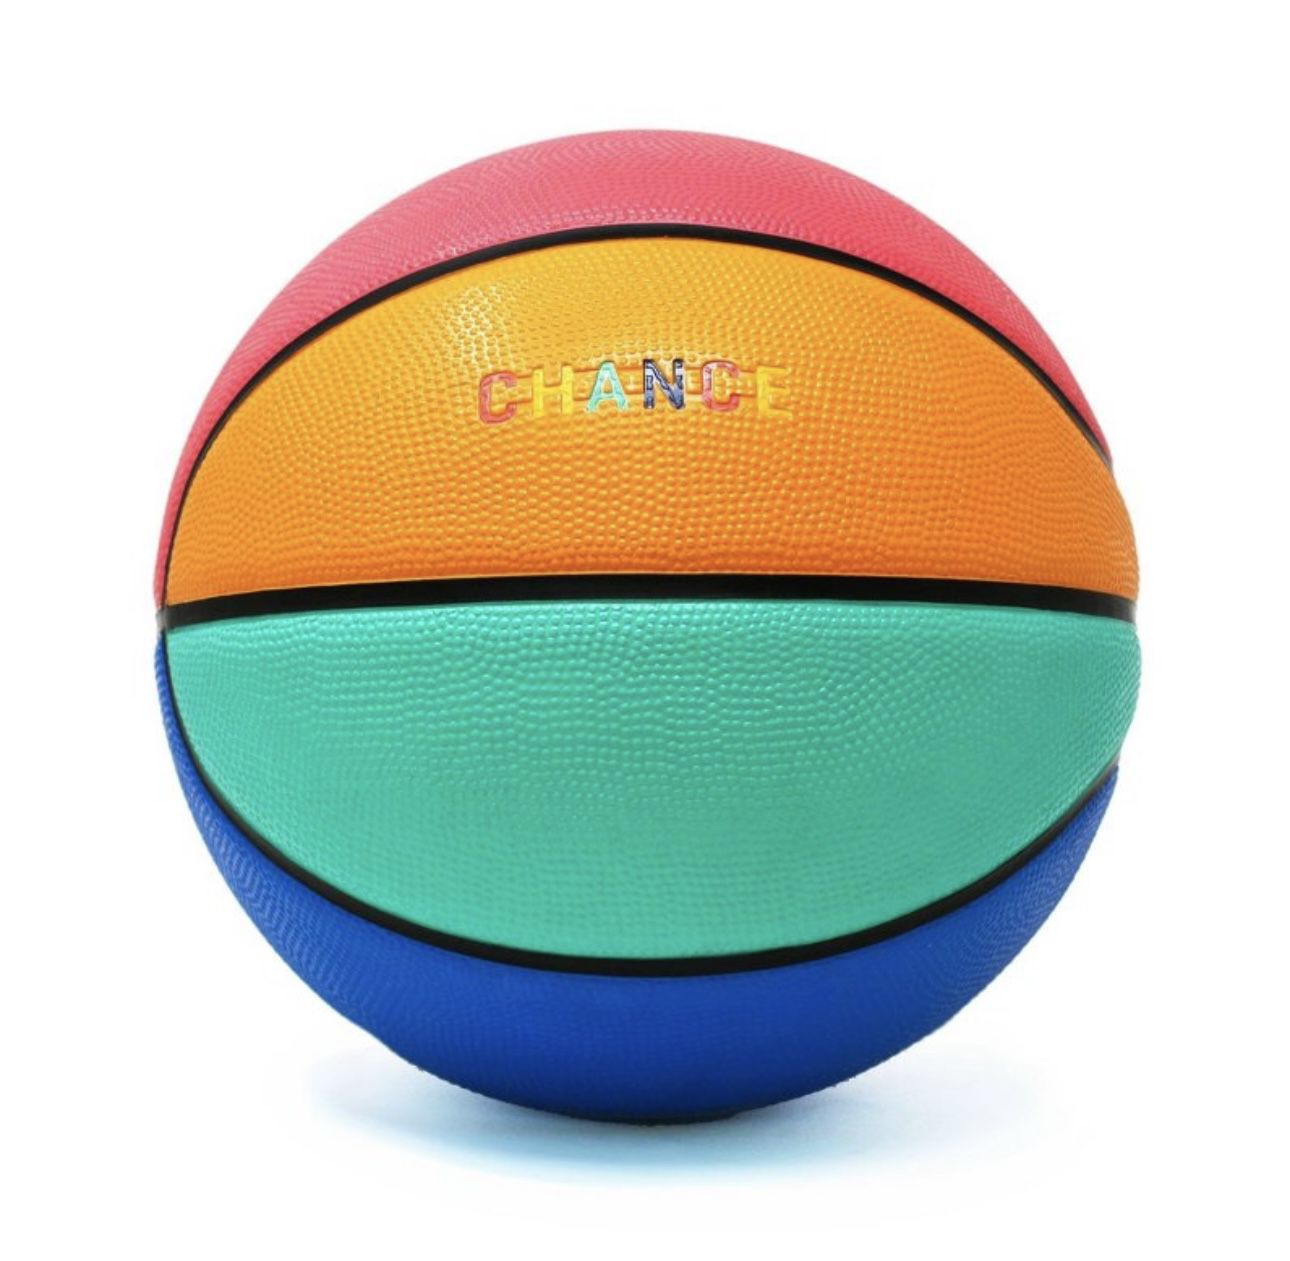 Chance Basketball 